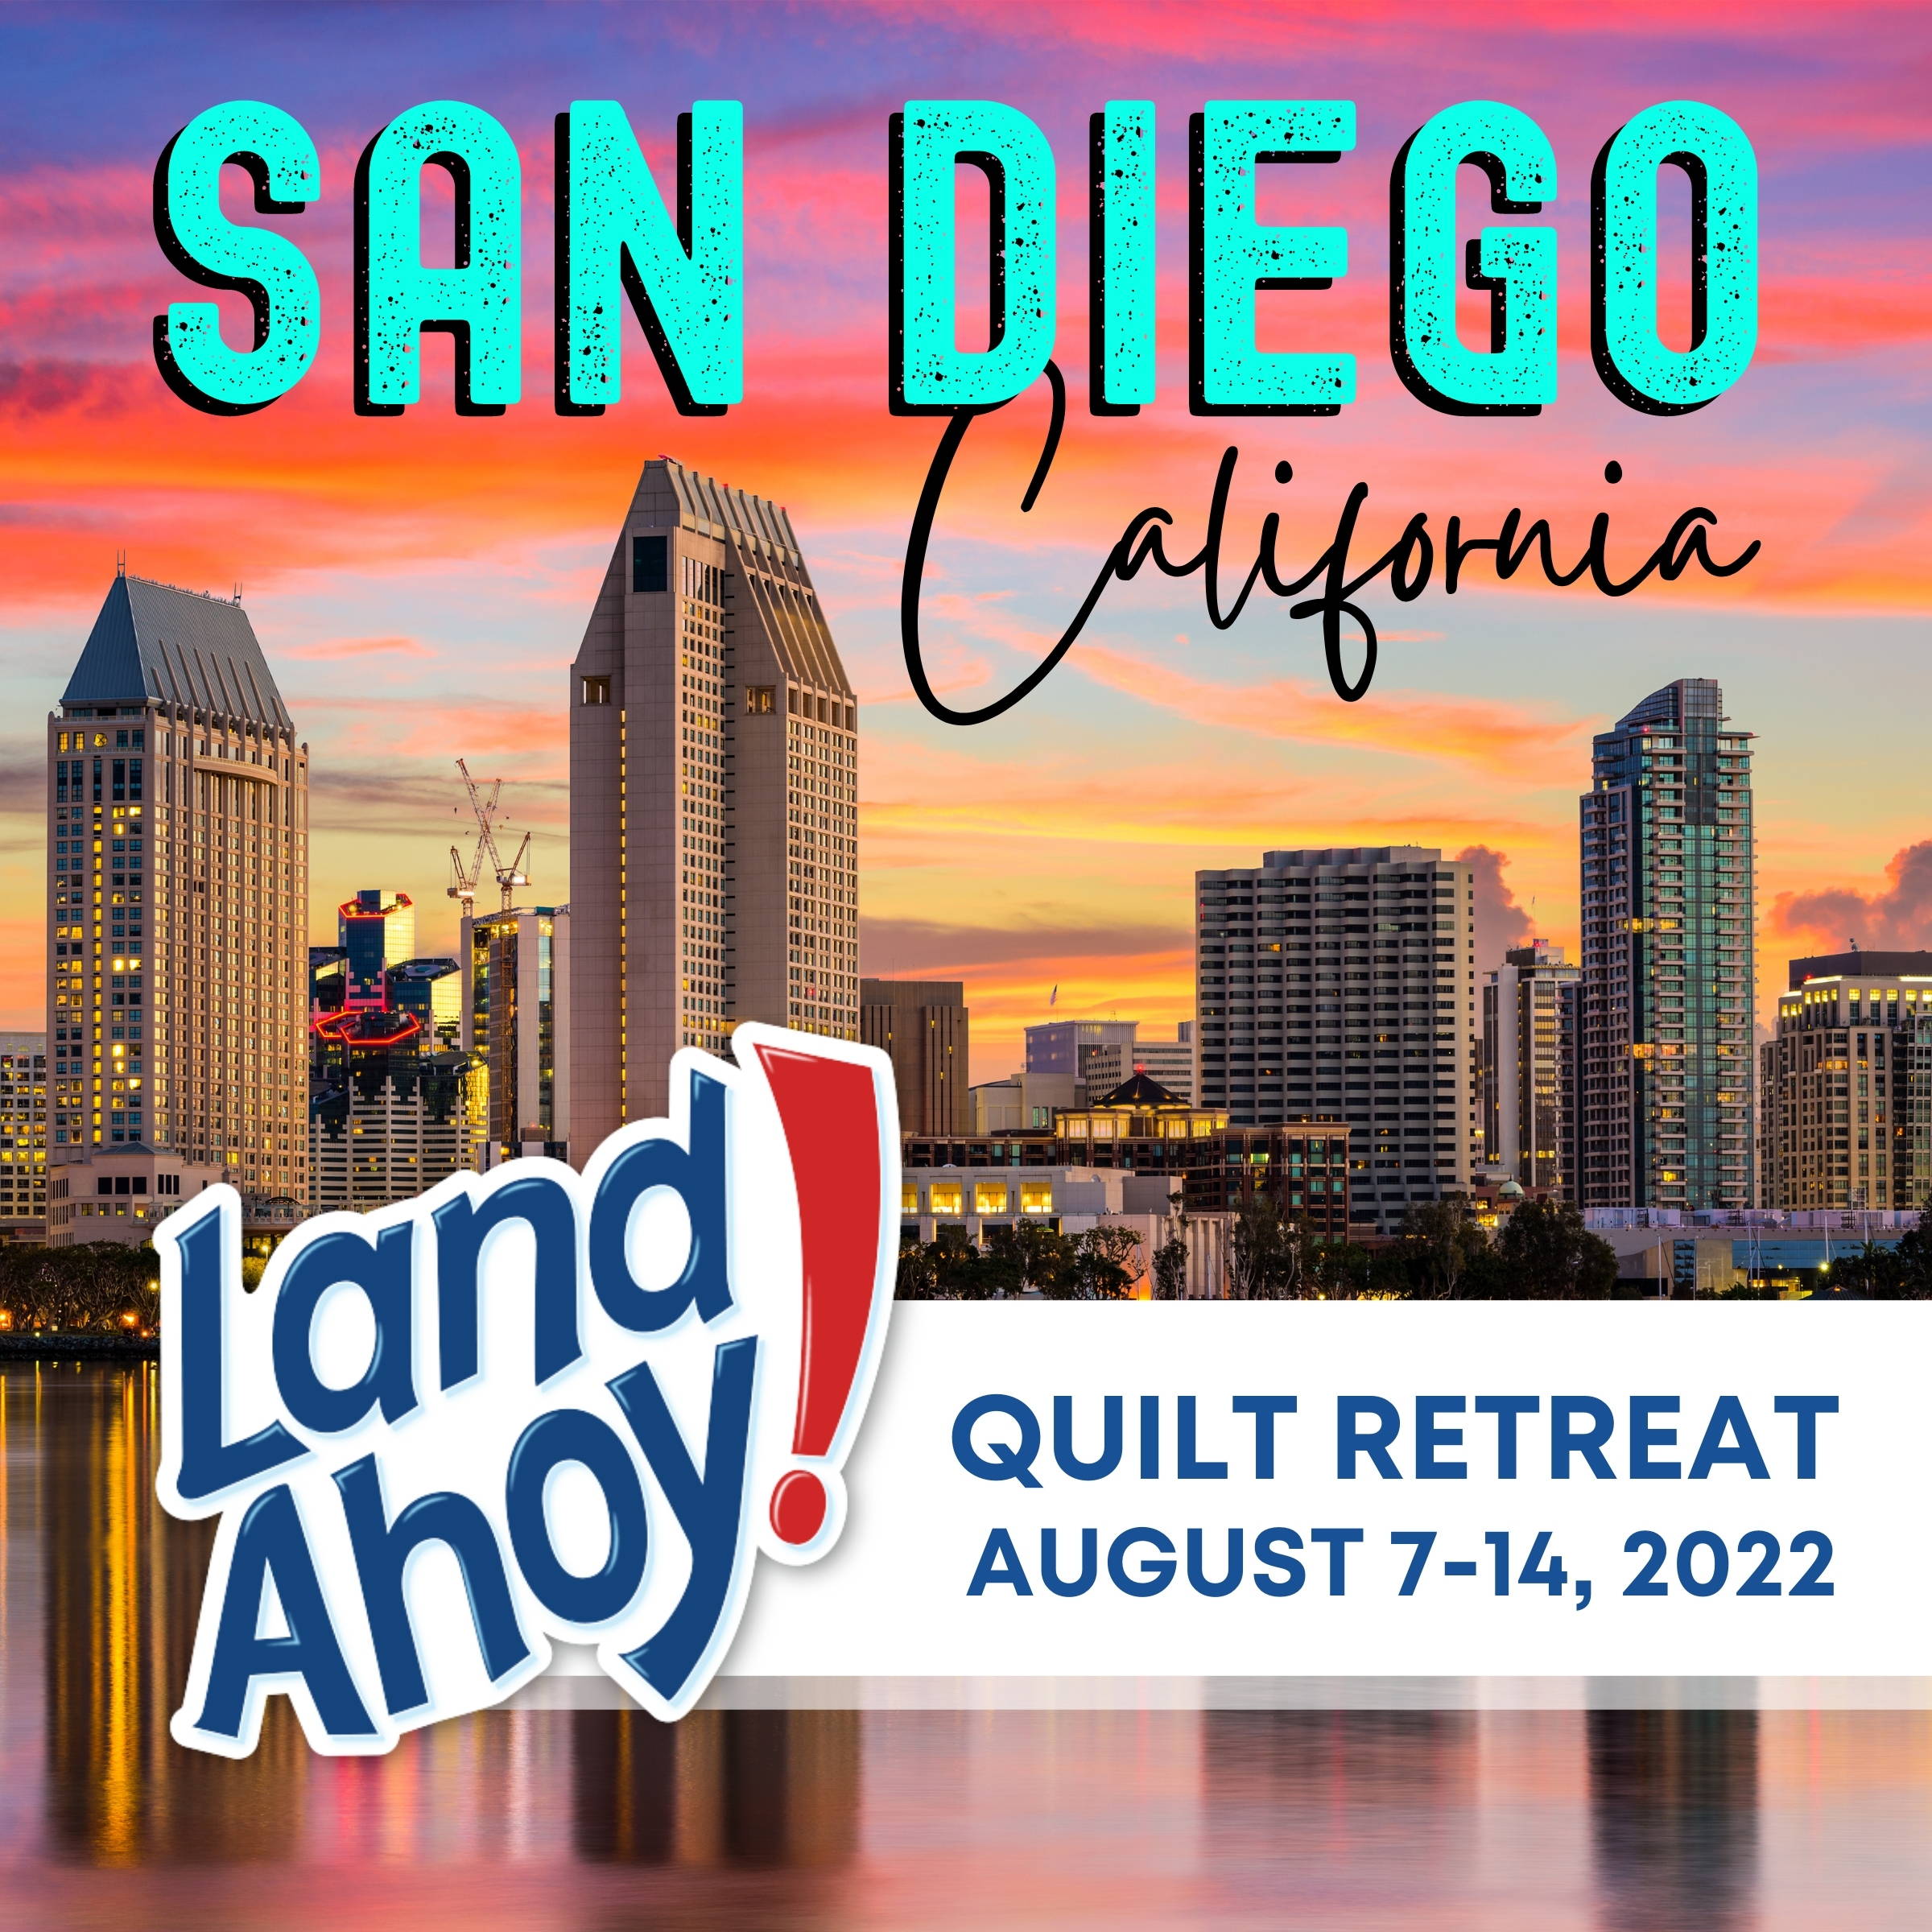 Land Ahoy! San Diego, CA: August 7 - 14, 2022